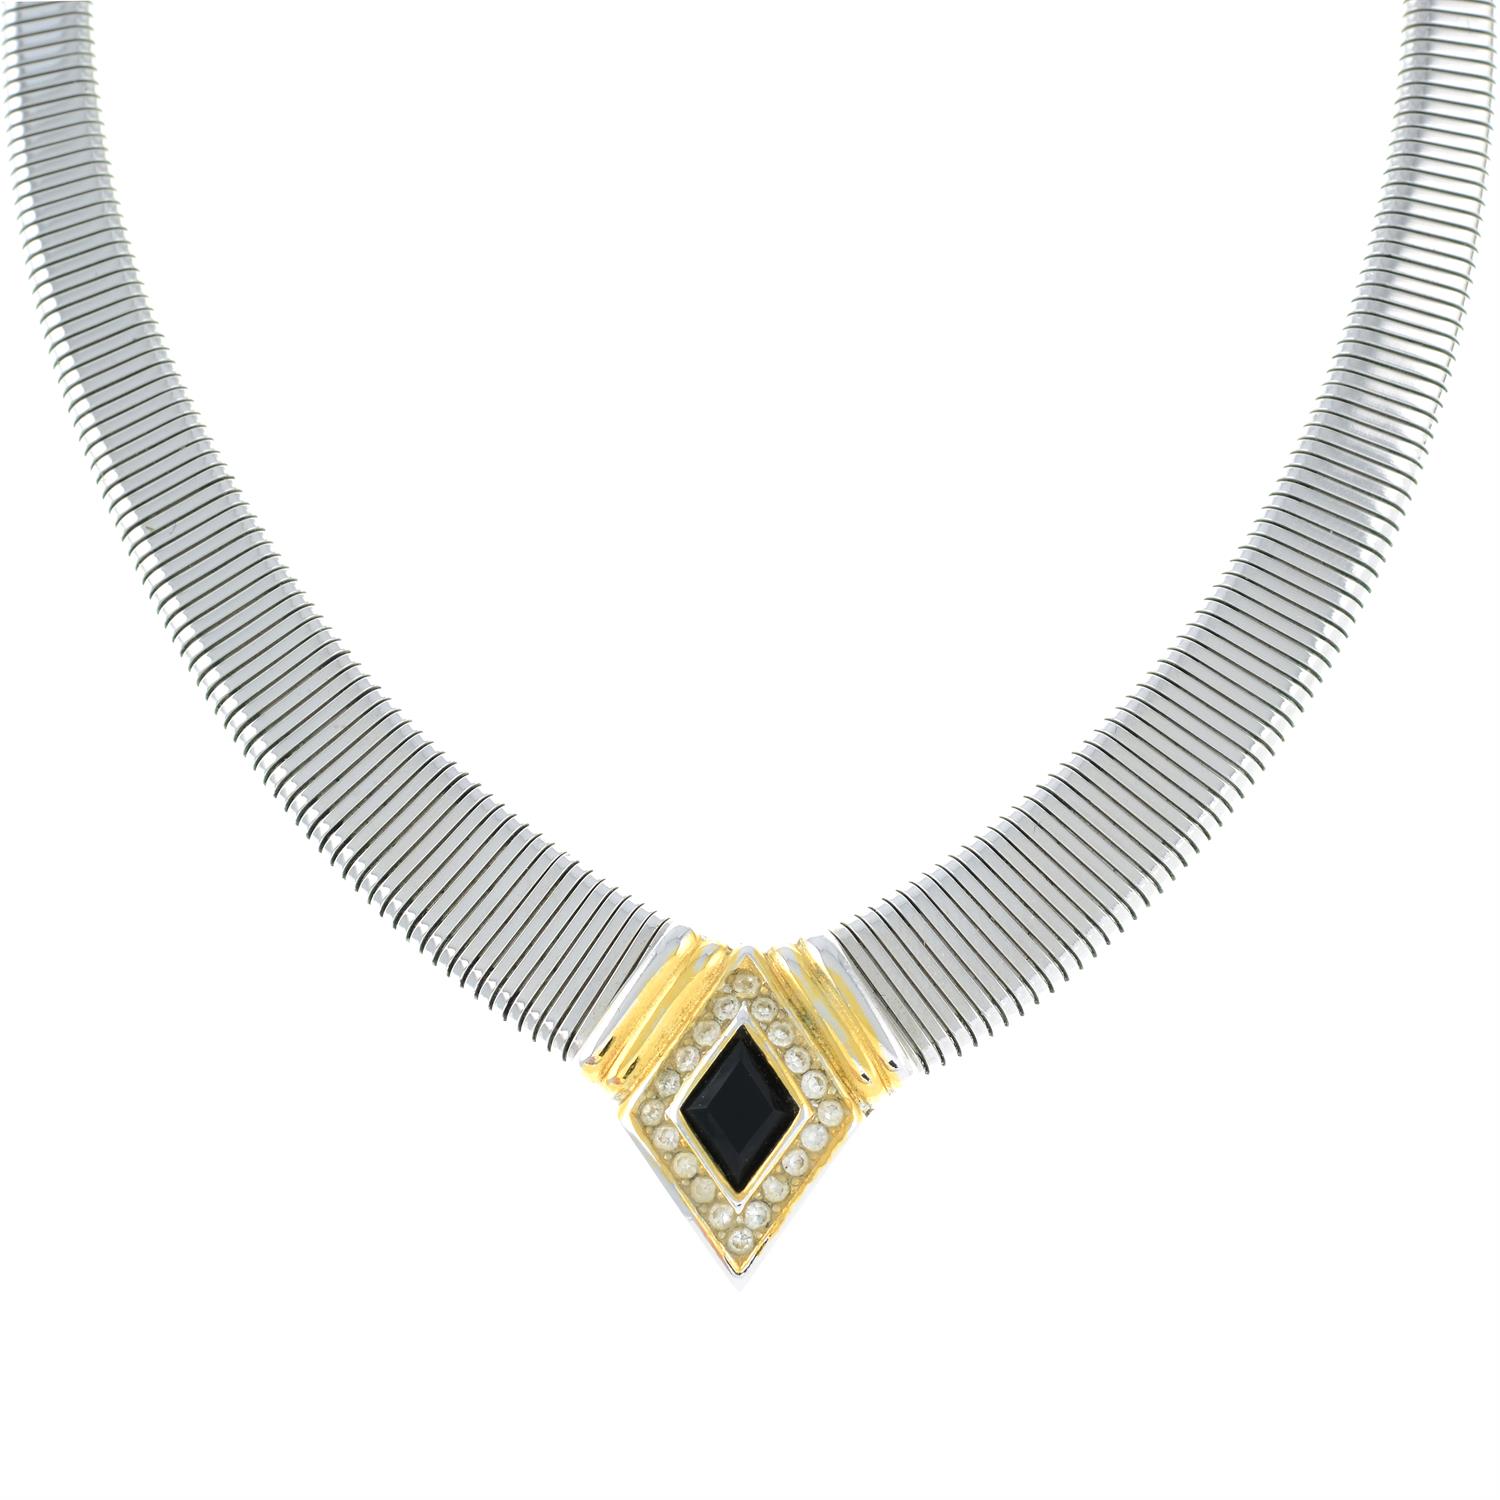 CHRISTIAN DIOR - an enamel and paste set integral pendant necklace.